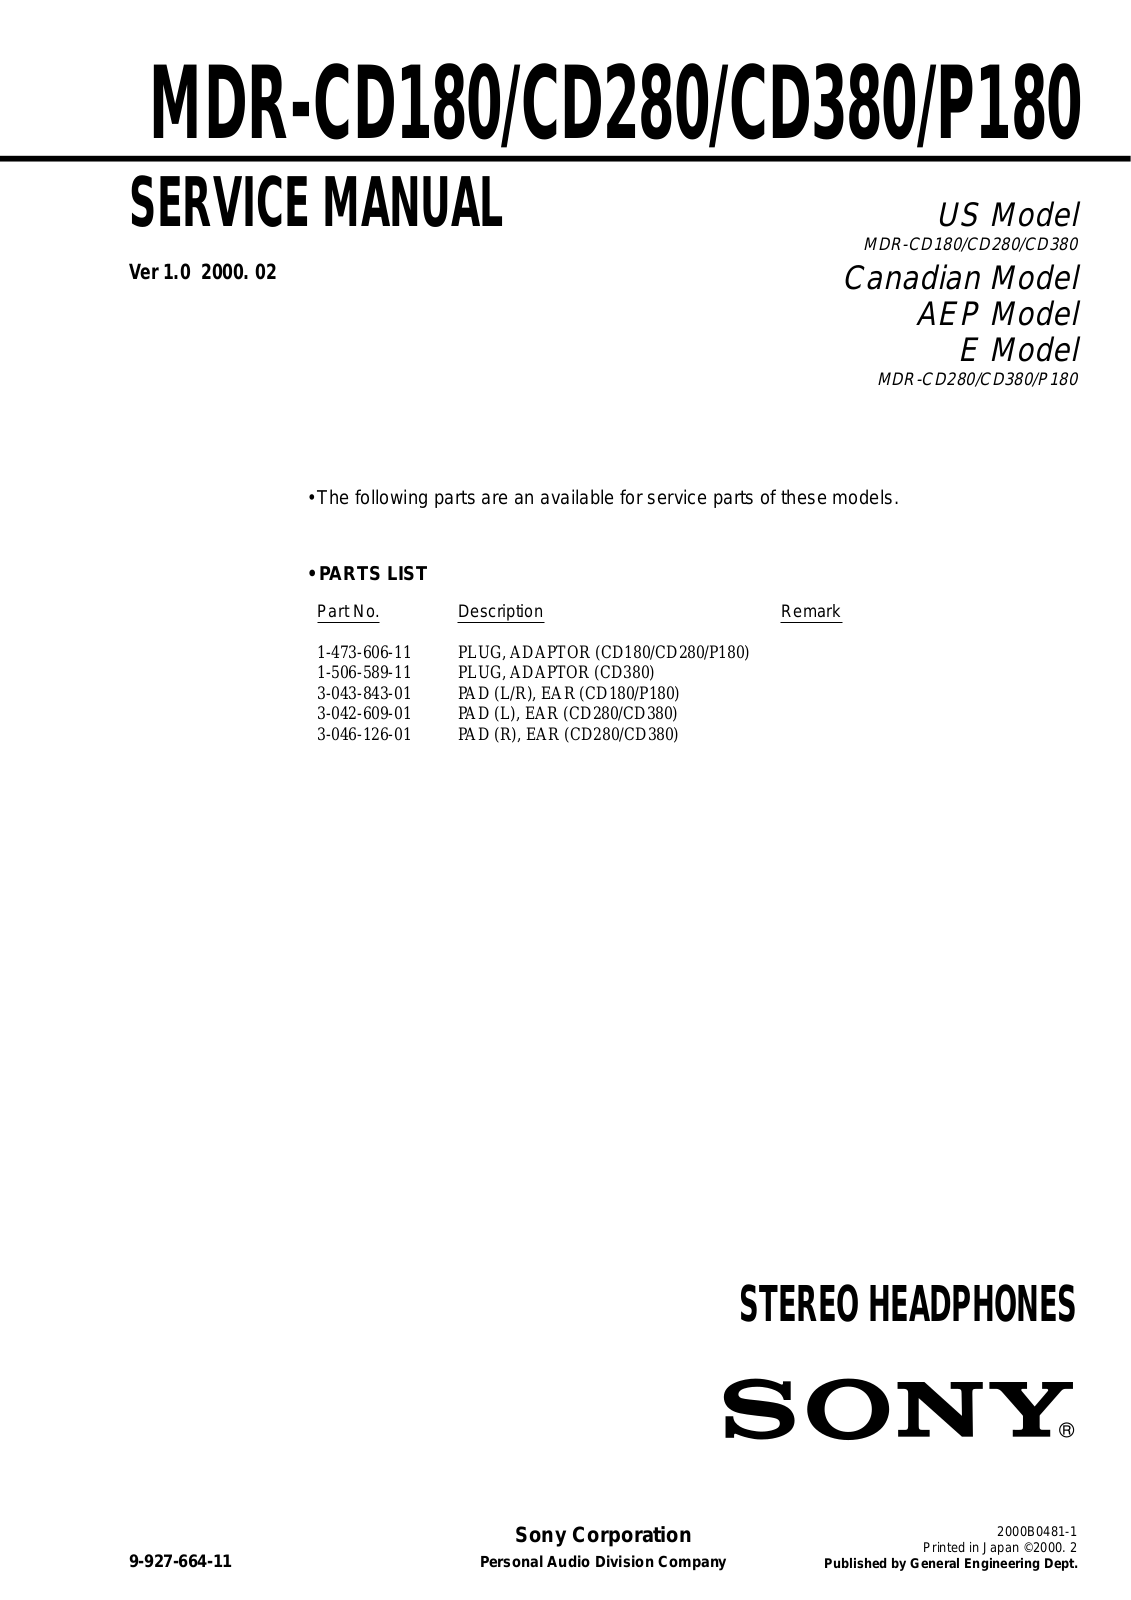 Sony MDR-CD180, MDR-CD280, MDR-CD380, MDR-P180 Service Manual